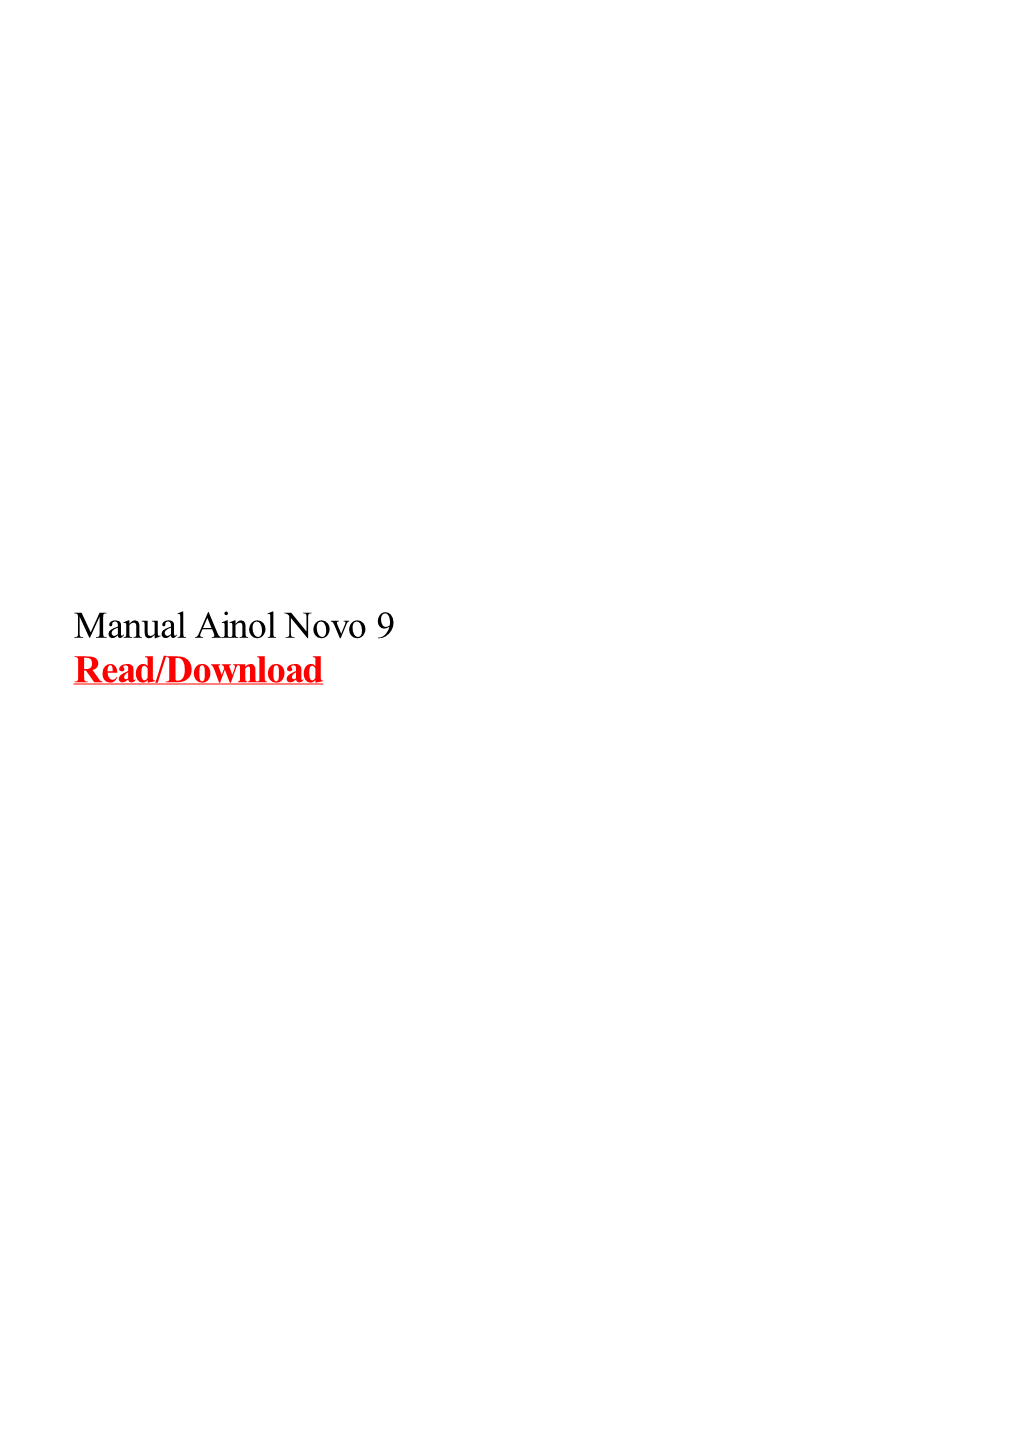 Manual Ainol Novo 9